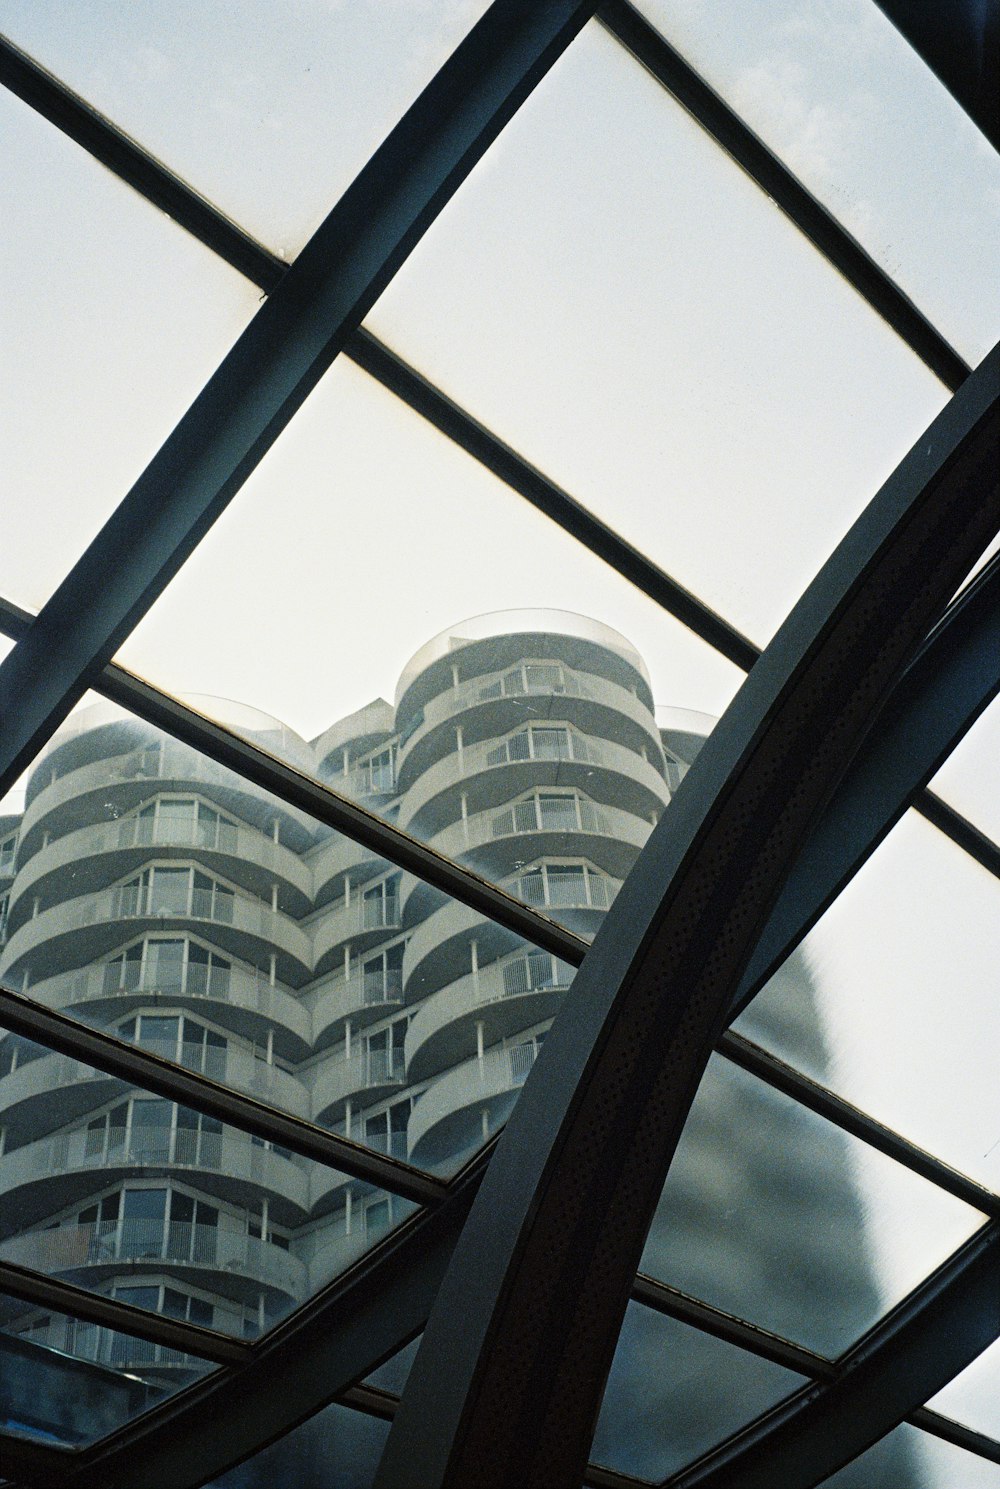 a view of a building through a metal frame